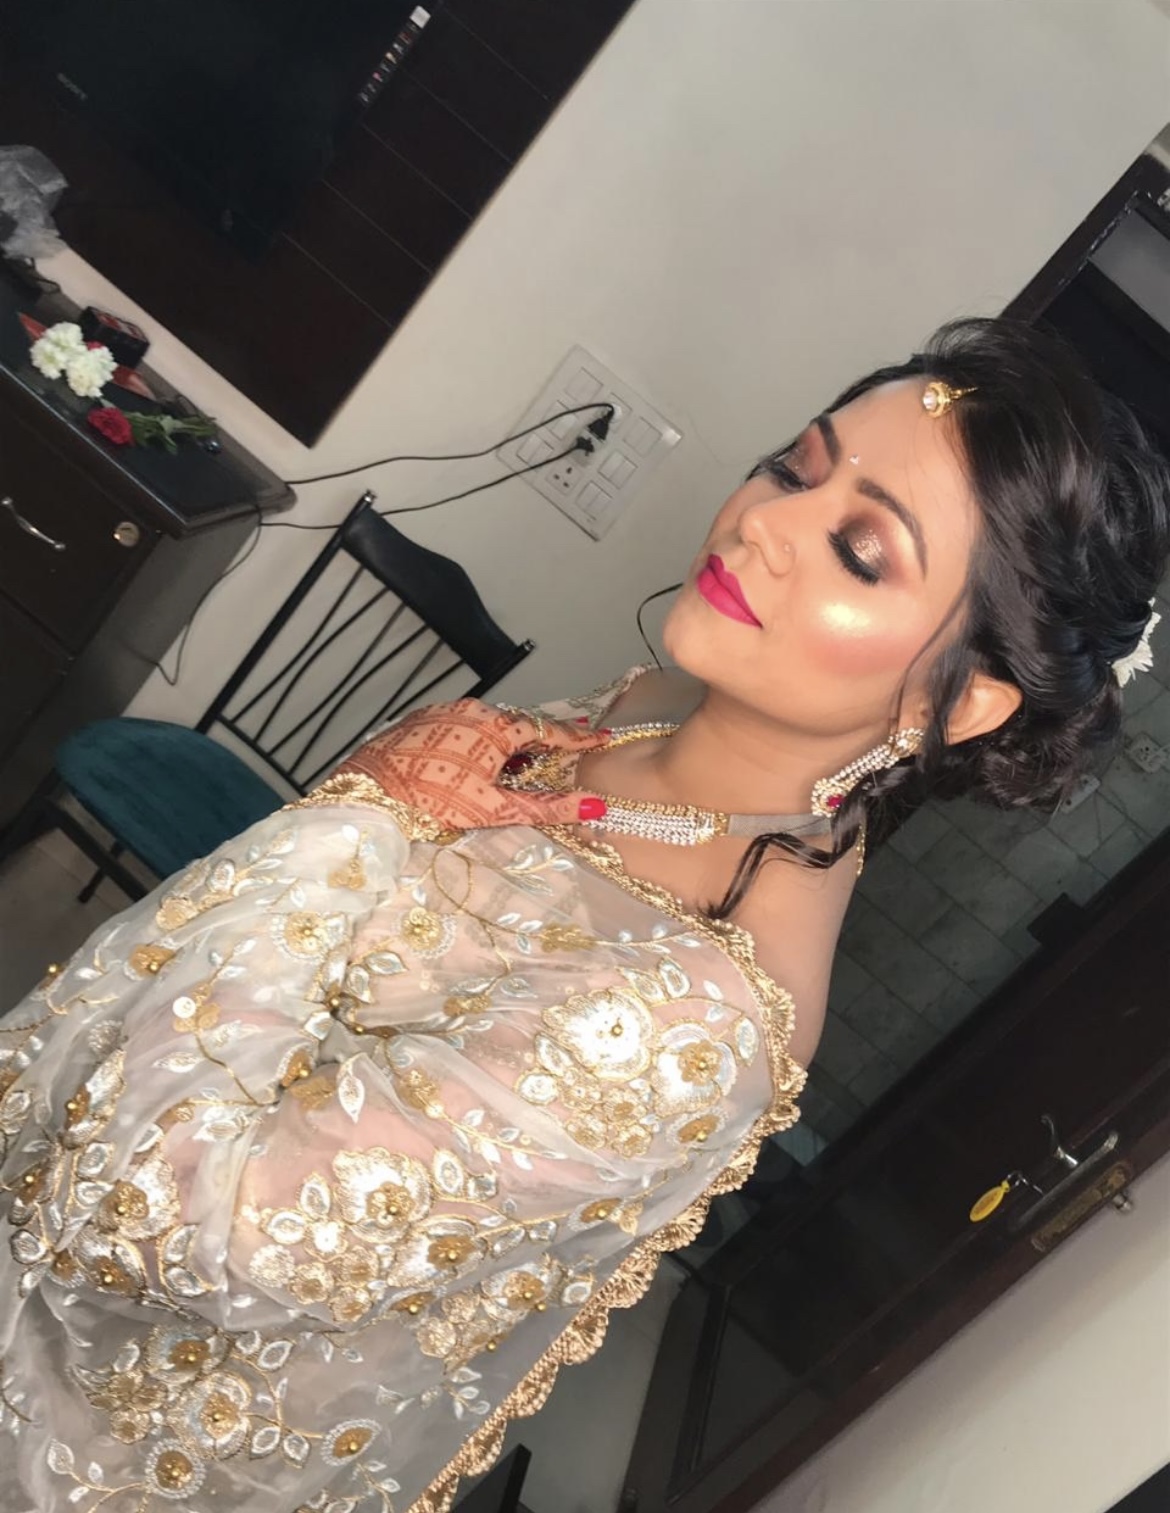 navneet-kaur-makeup-artist-delhi-ncr-olready